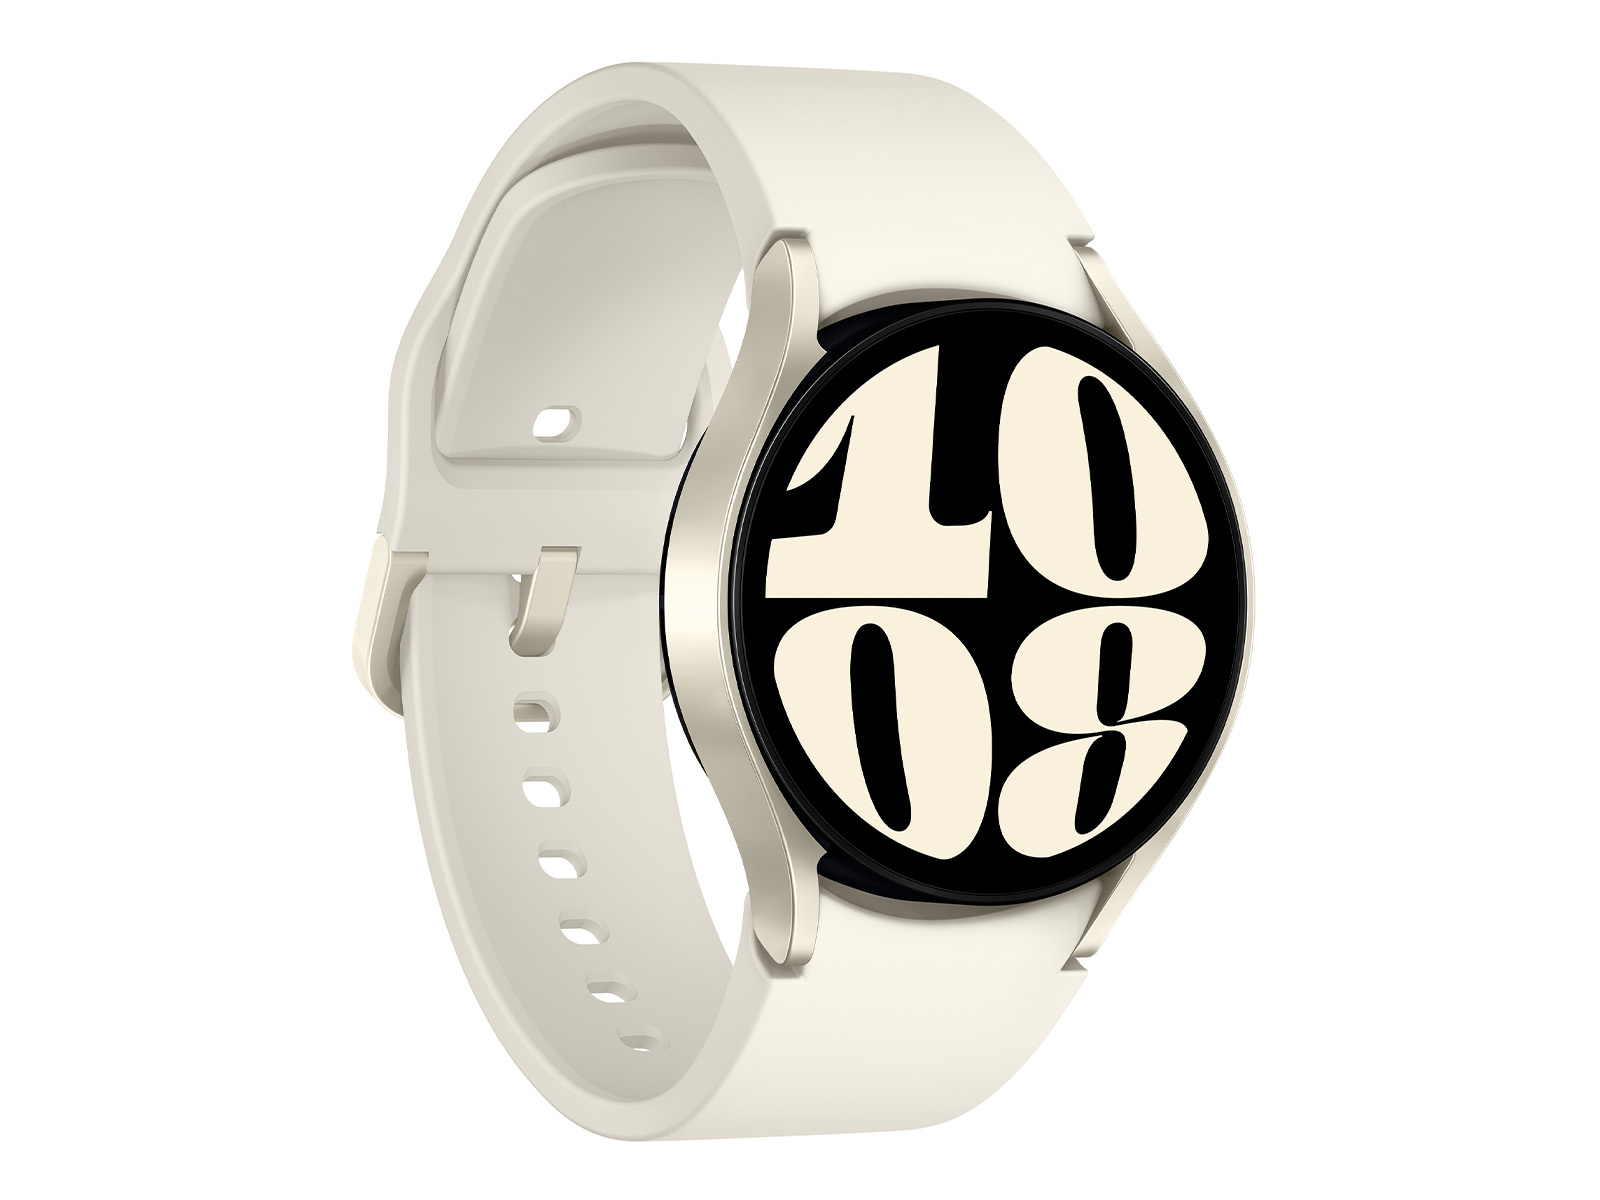 Buy Swistar 1.9572-51M Gd Wrist Watch Online - Best Price Swistar  1.9572-51M Gd Wrist Watch - Justdial Shop Online.